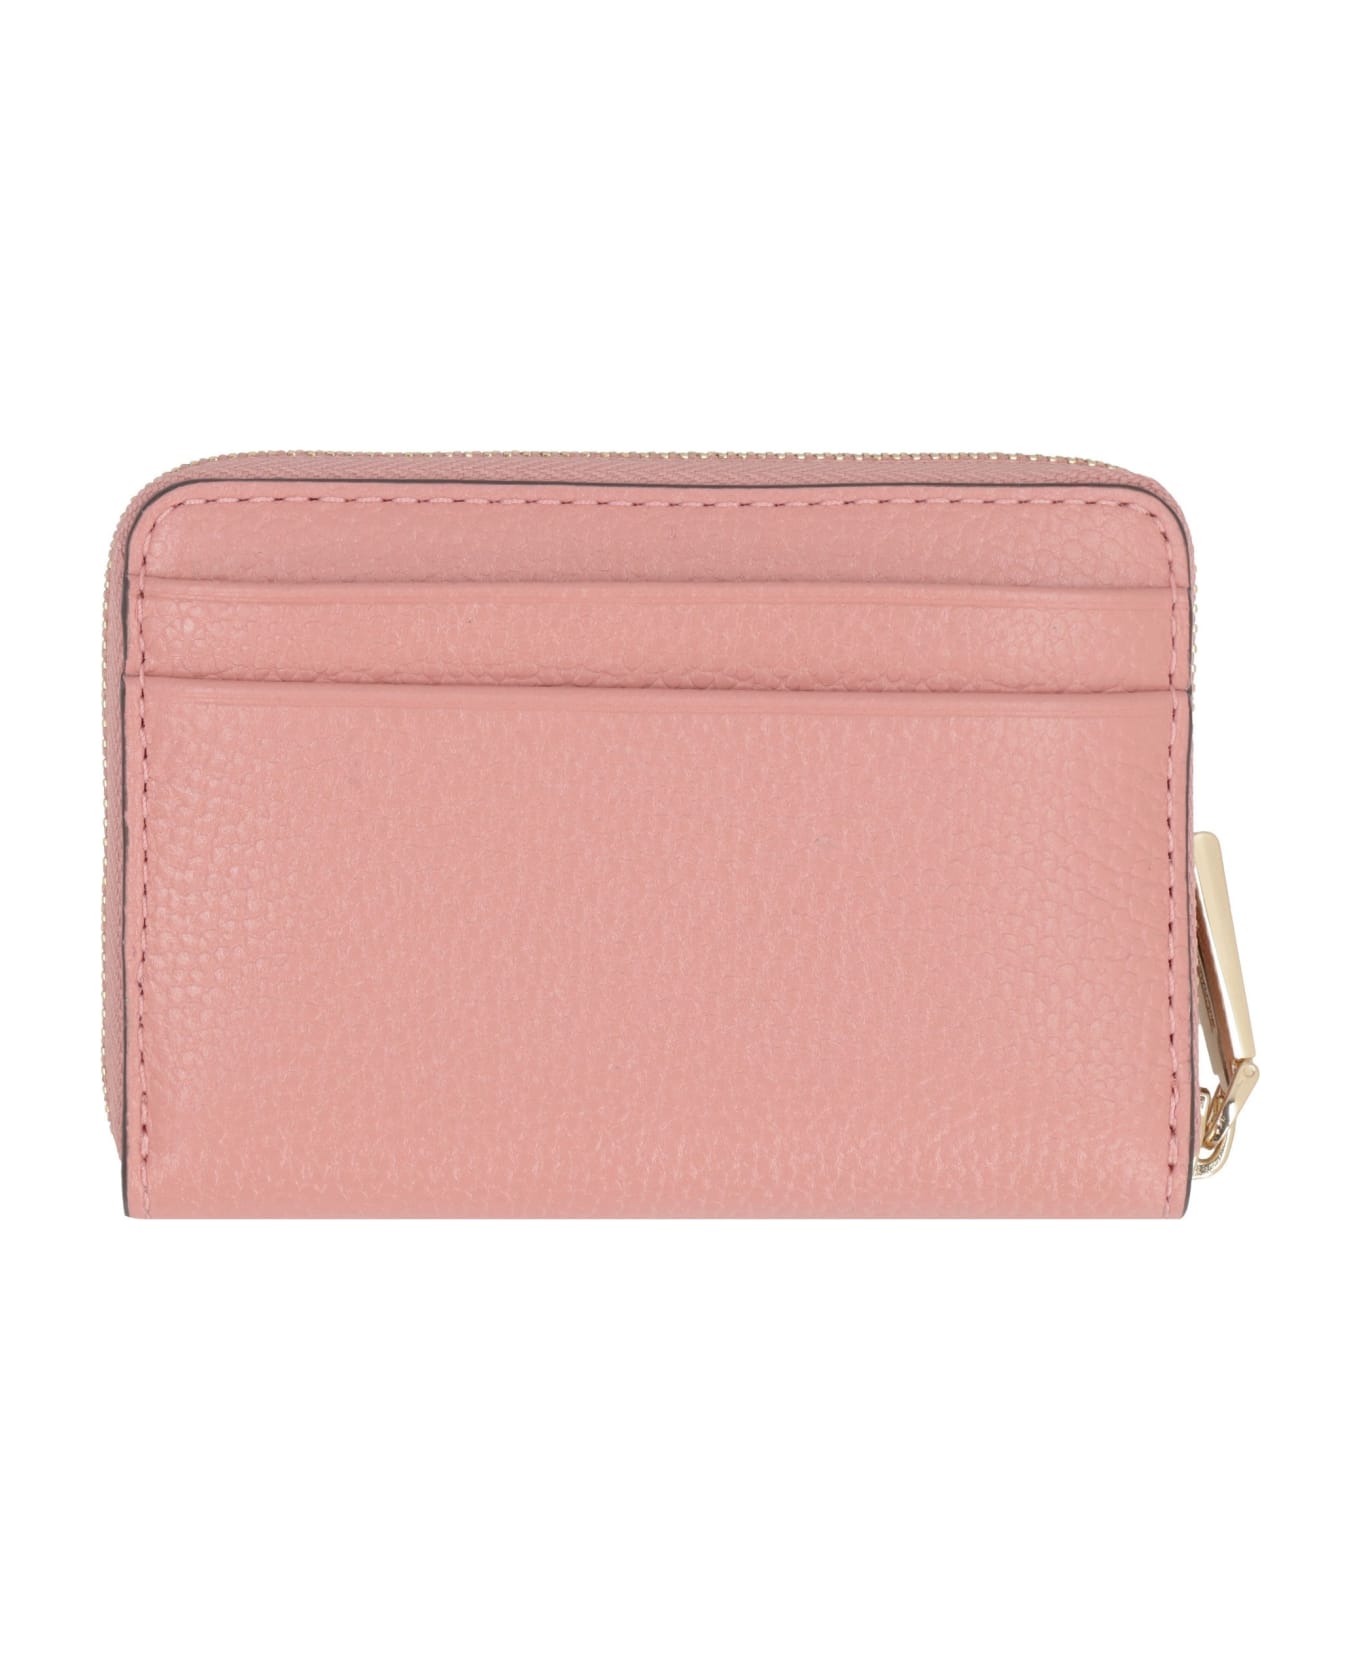 MICHAEL Michael Kors Jet Set Leather Wallet - Pink 財布